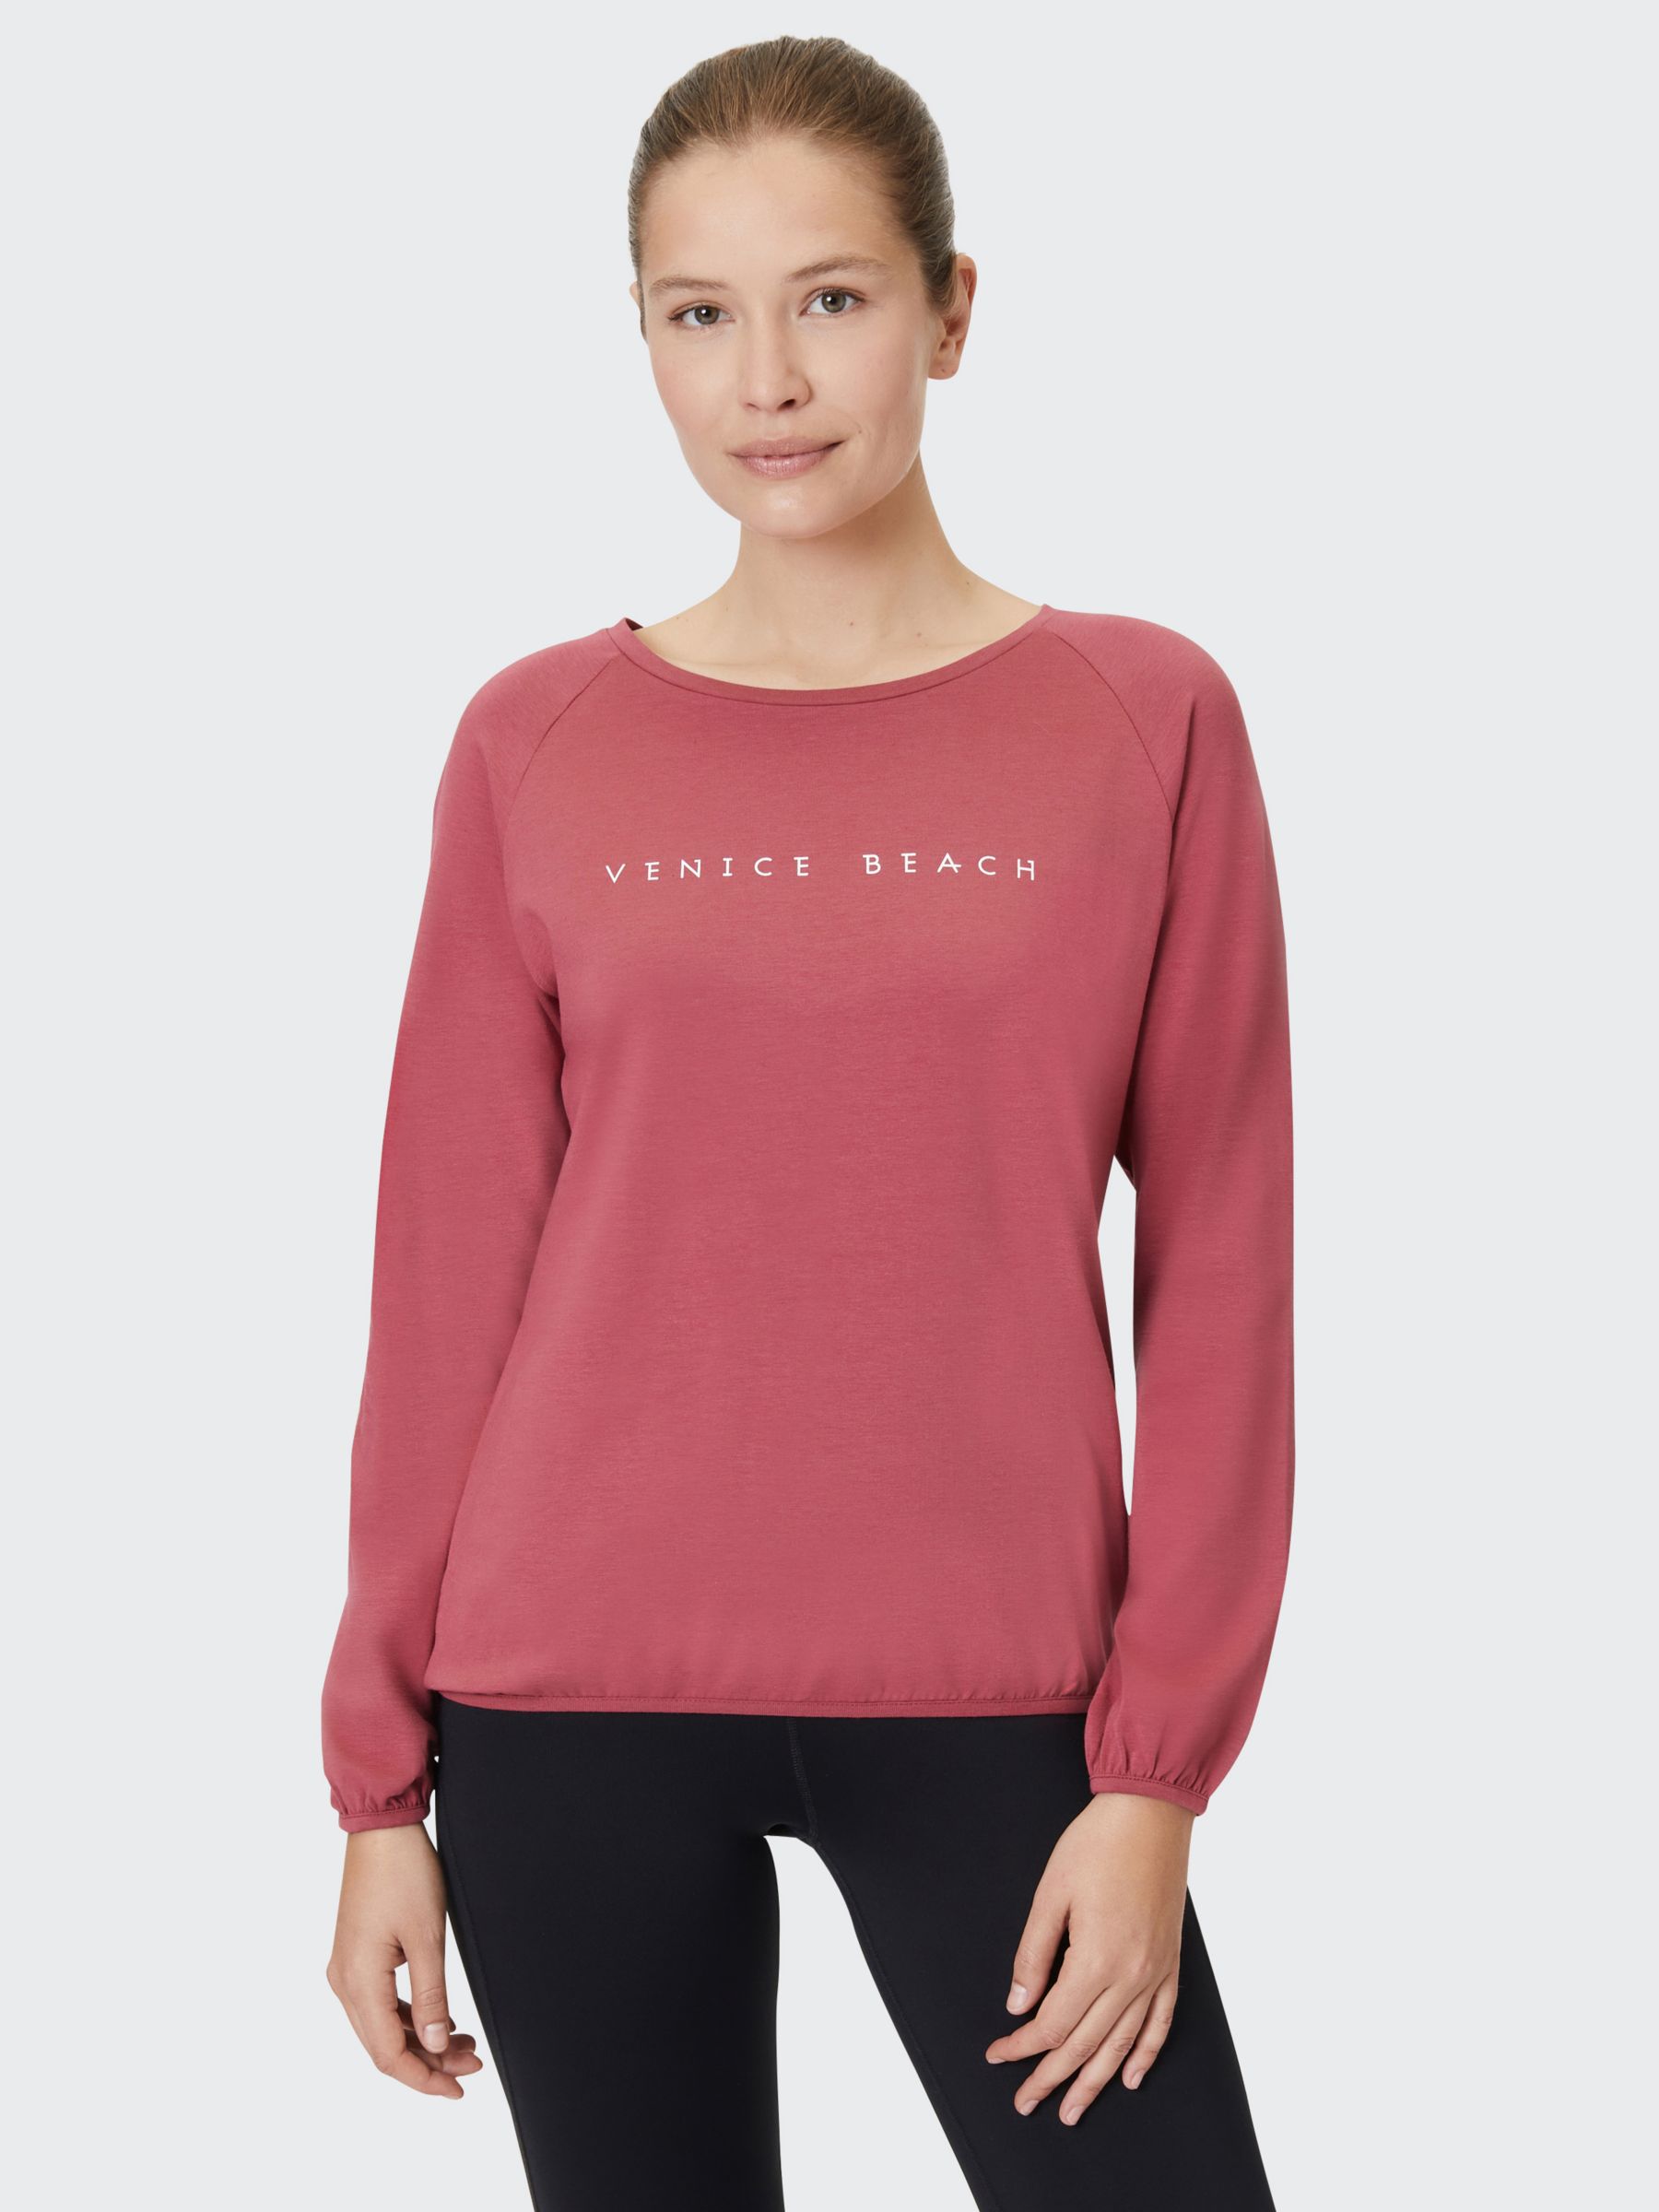 Venice Beach Rylee Sweatshirt, Deep Red, XS